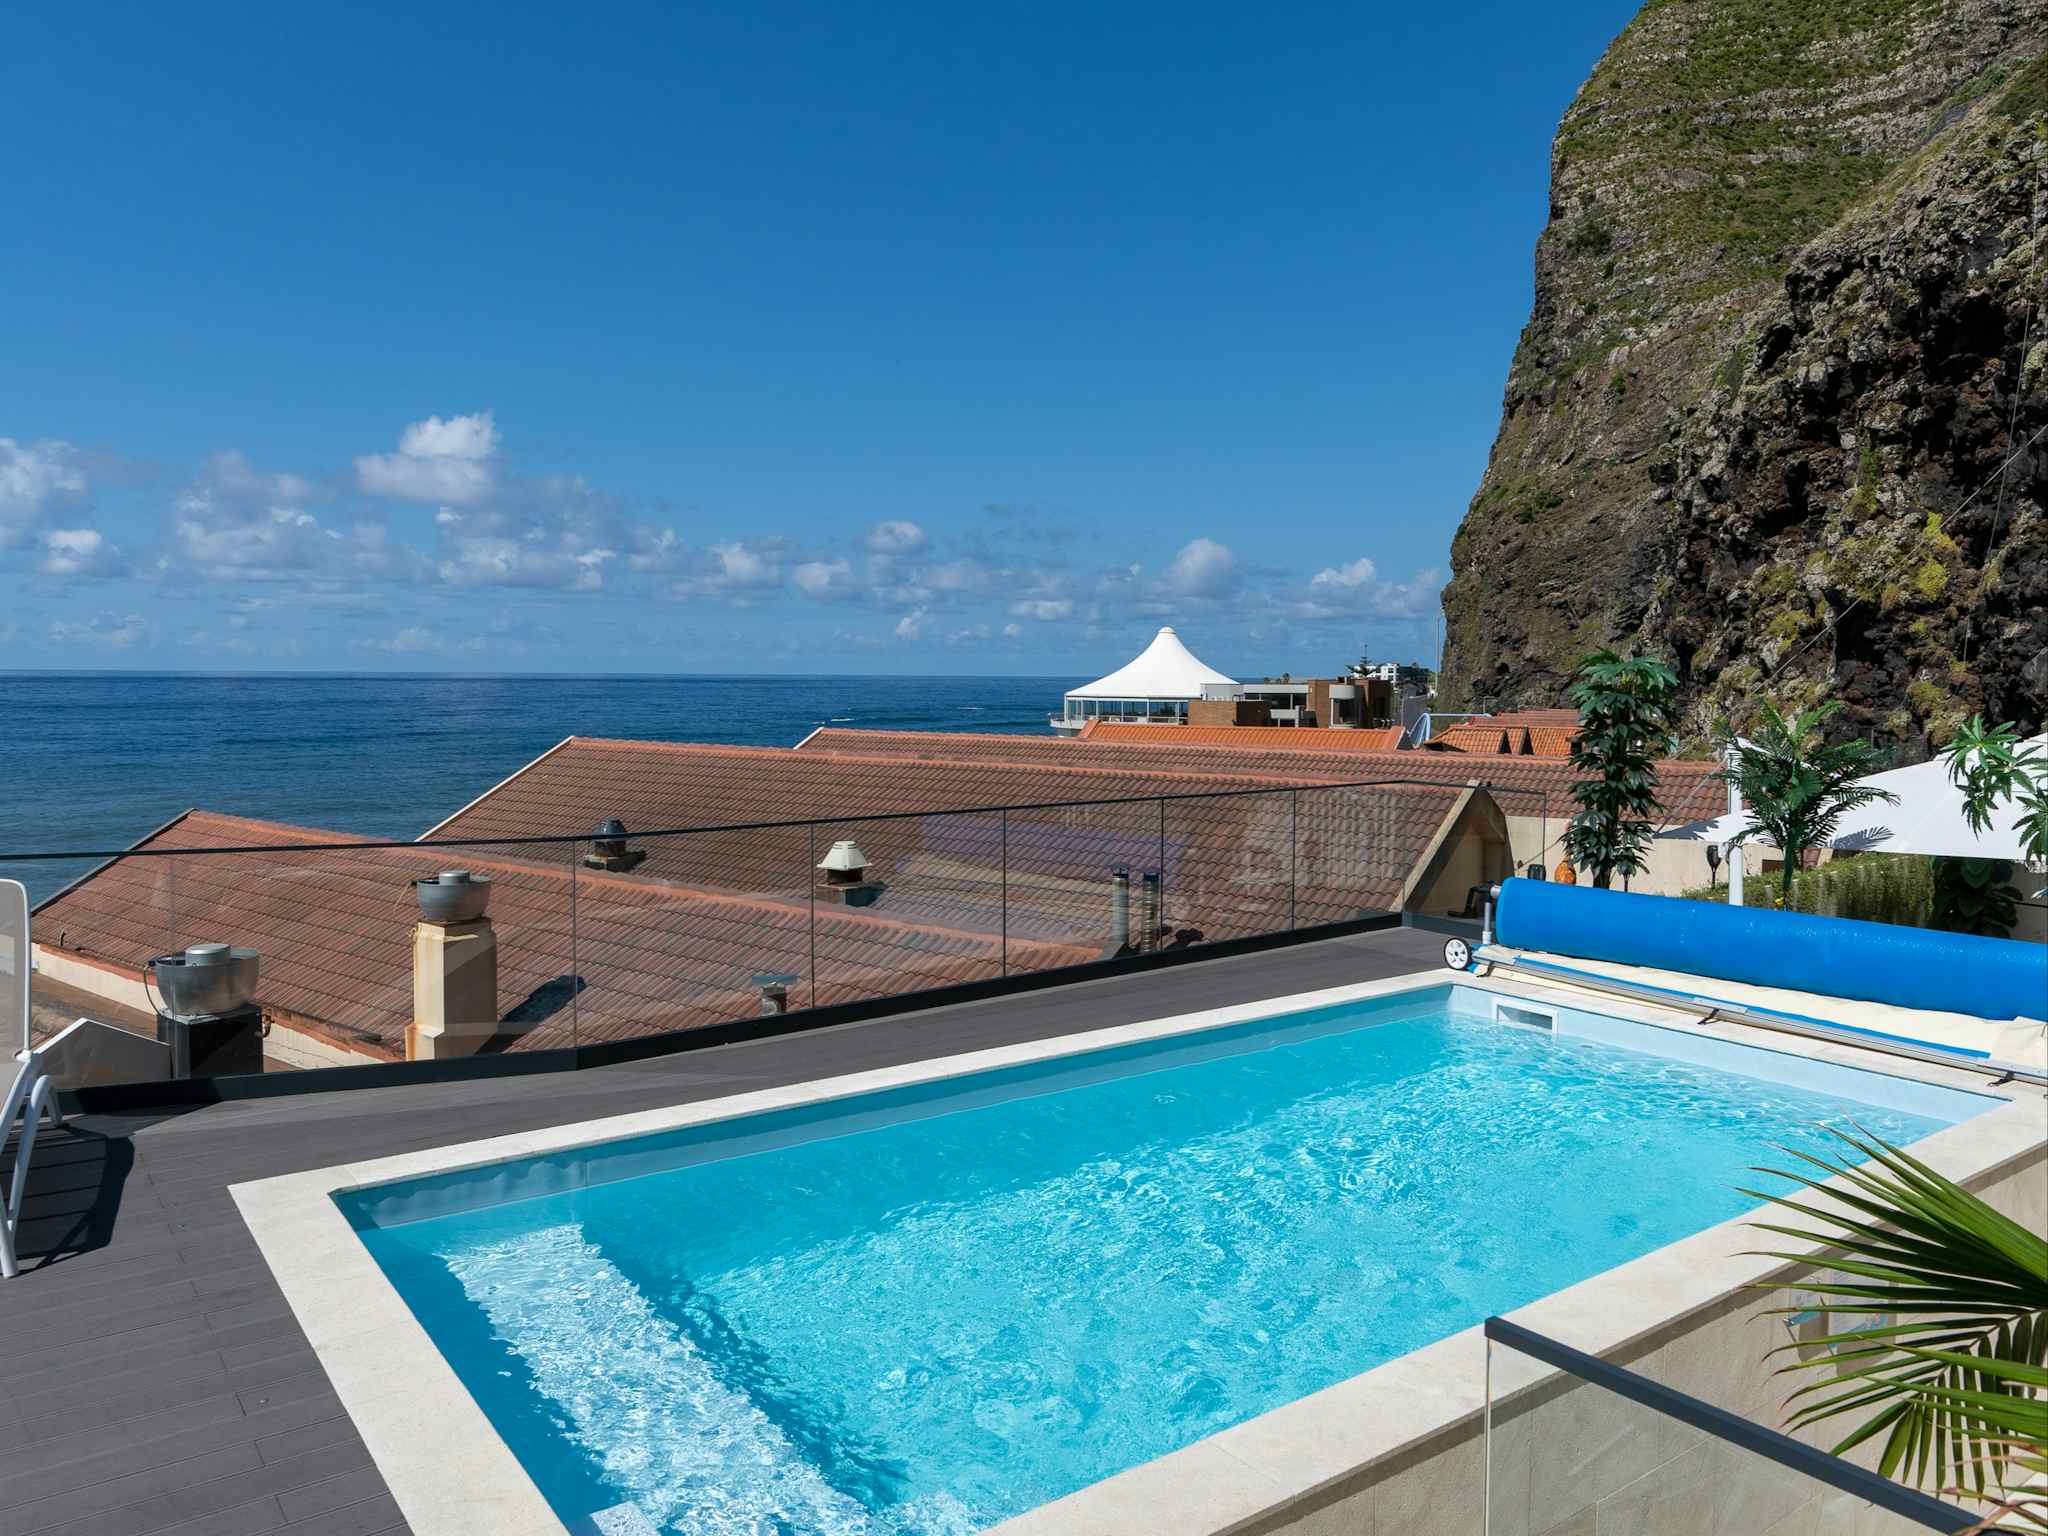 Hotel Mediterraneo, Sao Vincente, Madeira. Photo: Host/Madeira Mountain Tours